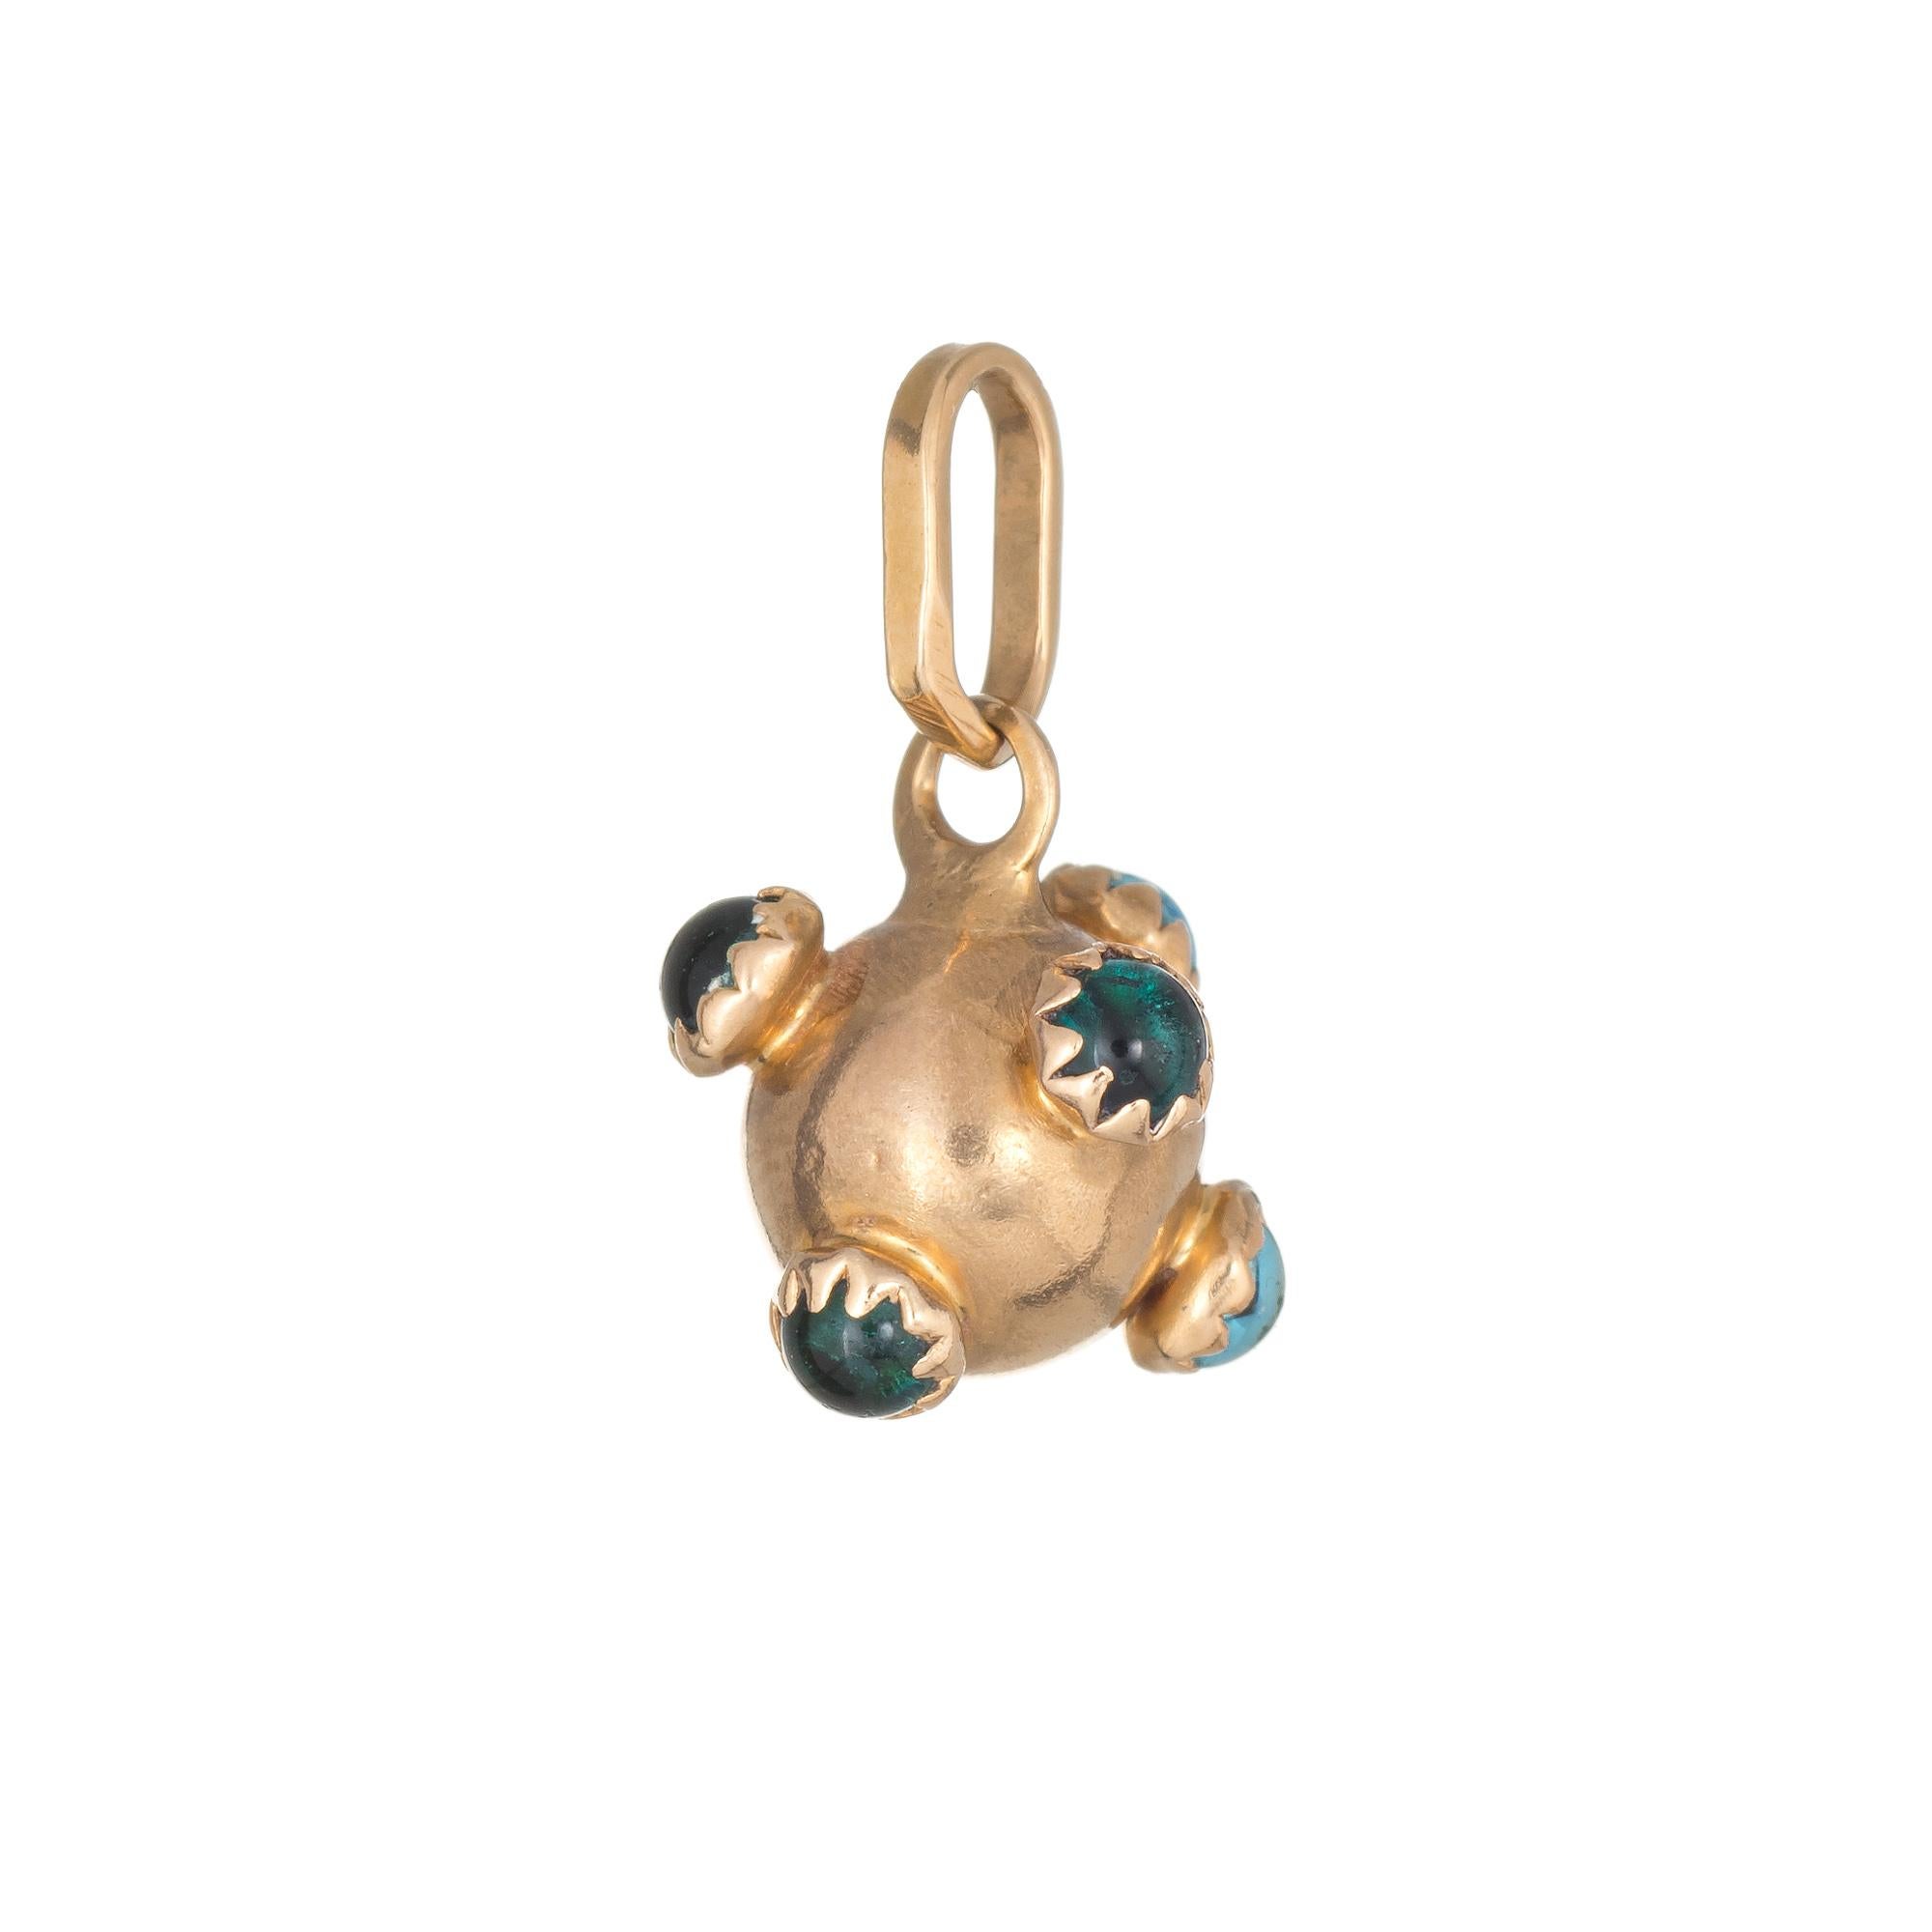 Modern Vintage Sputnik Orb Pendant Small Charm 18 Karat Gold Estate Jewelry Green